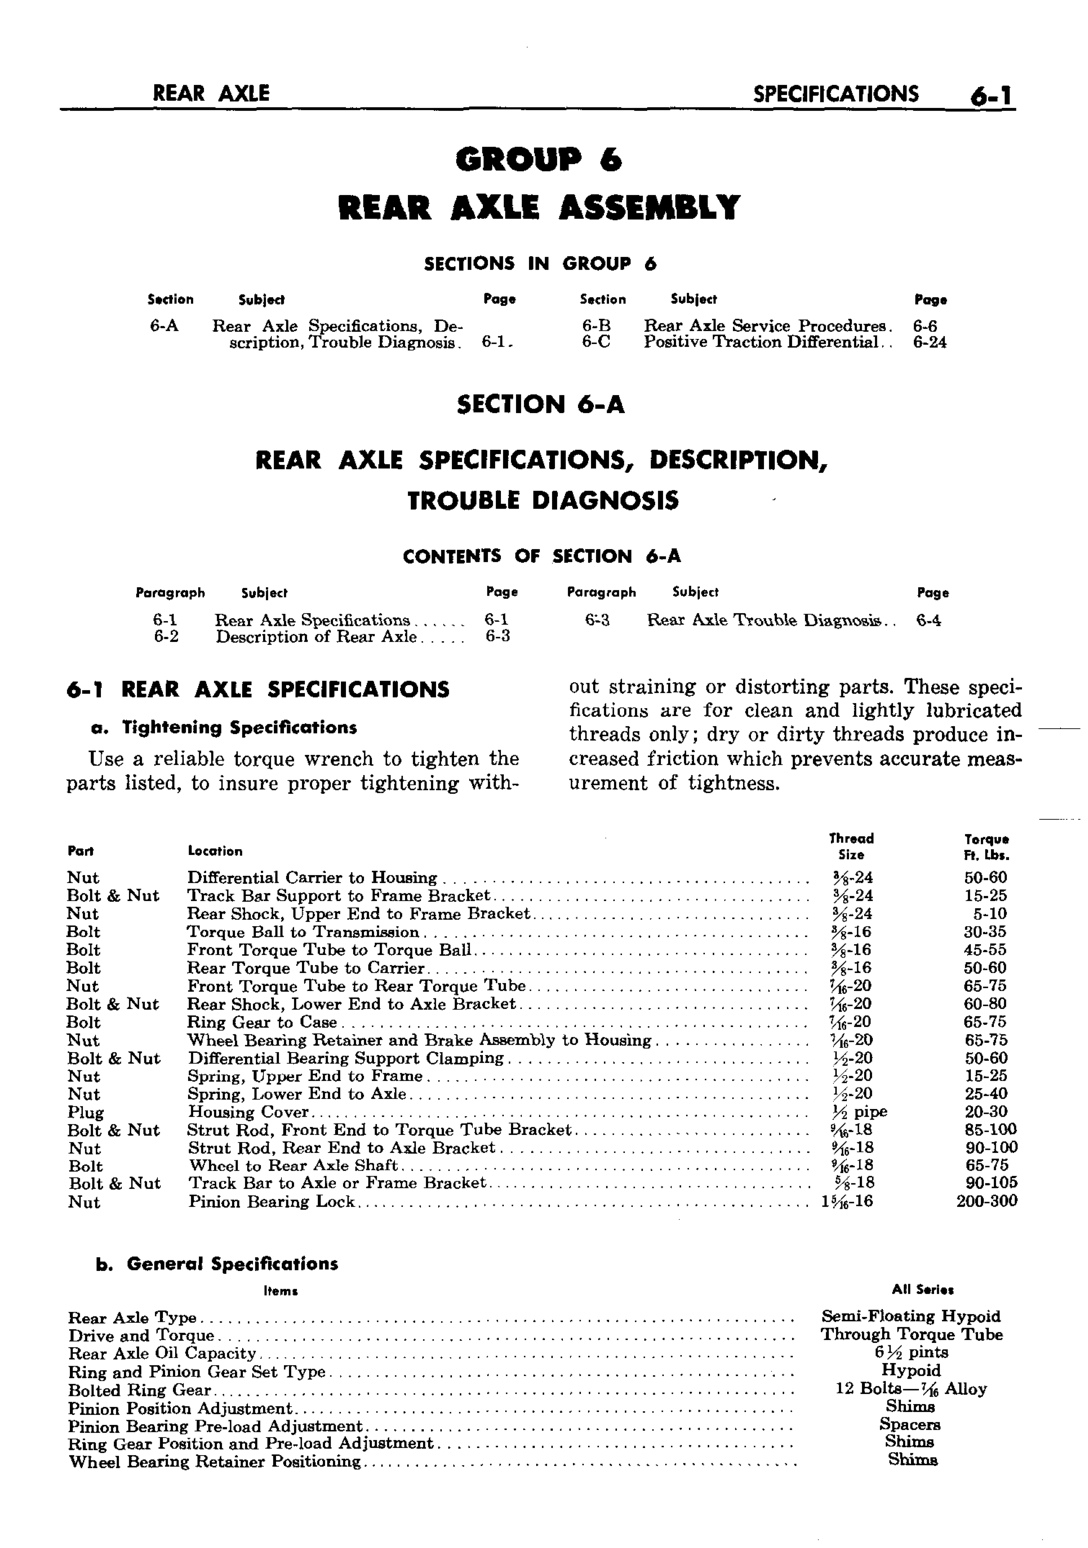 n_07 1959 Buick Shop Manual - Rear Axle-001-001.jpg